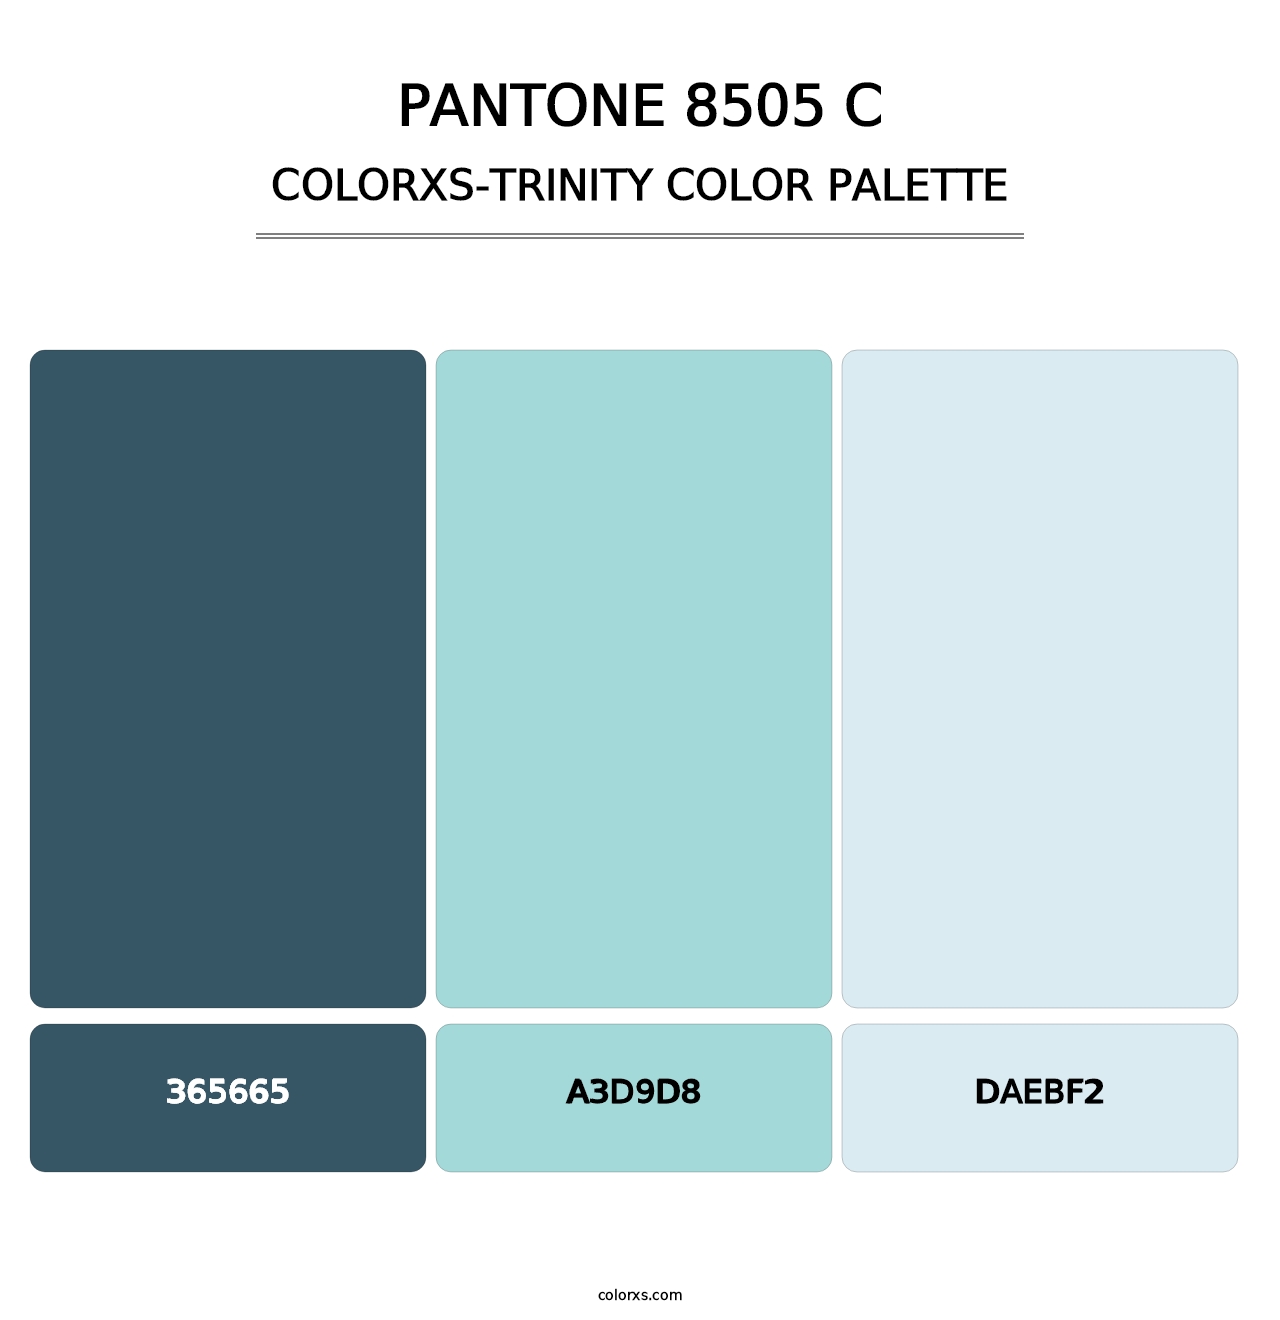 PANTONE 8505 C - Colorxs Trinity Palette